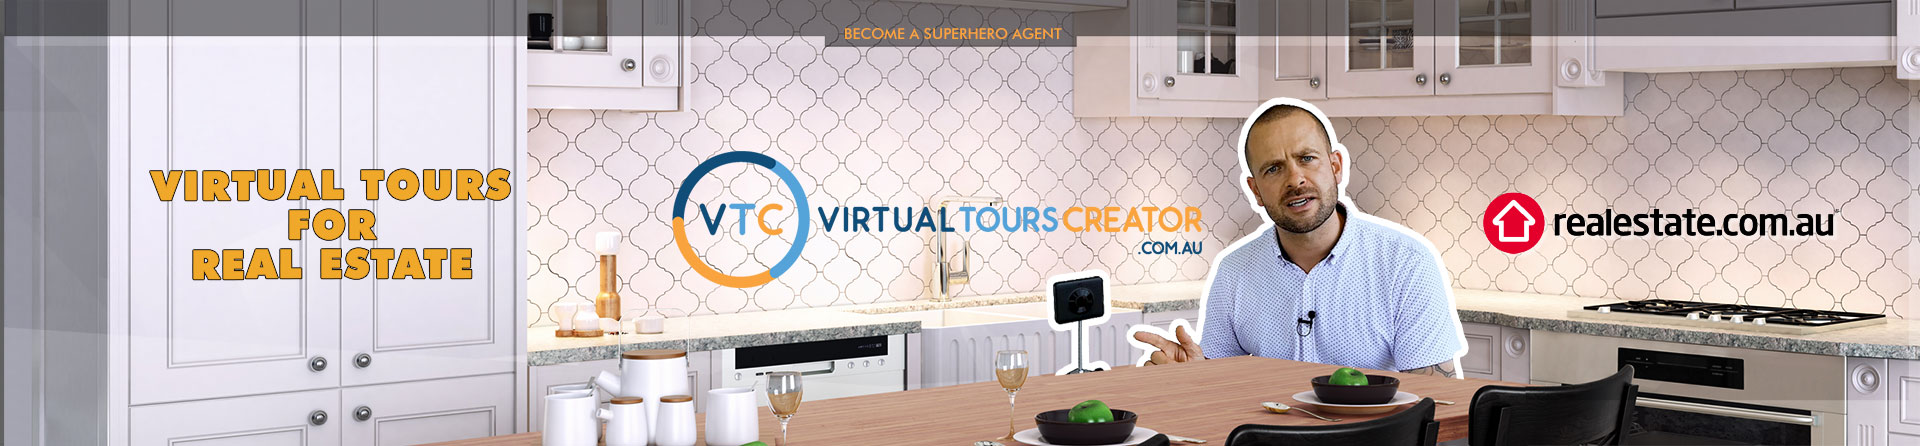 virtual tours for realtors by Virtual Tours Creator